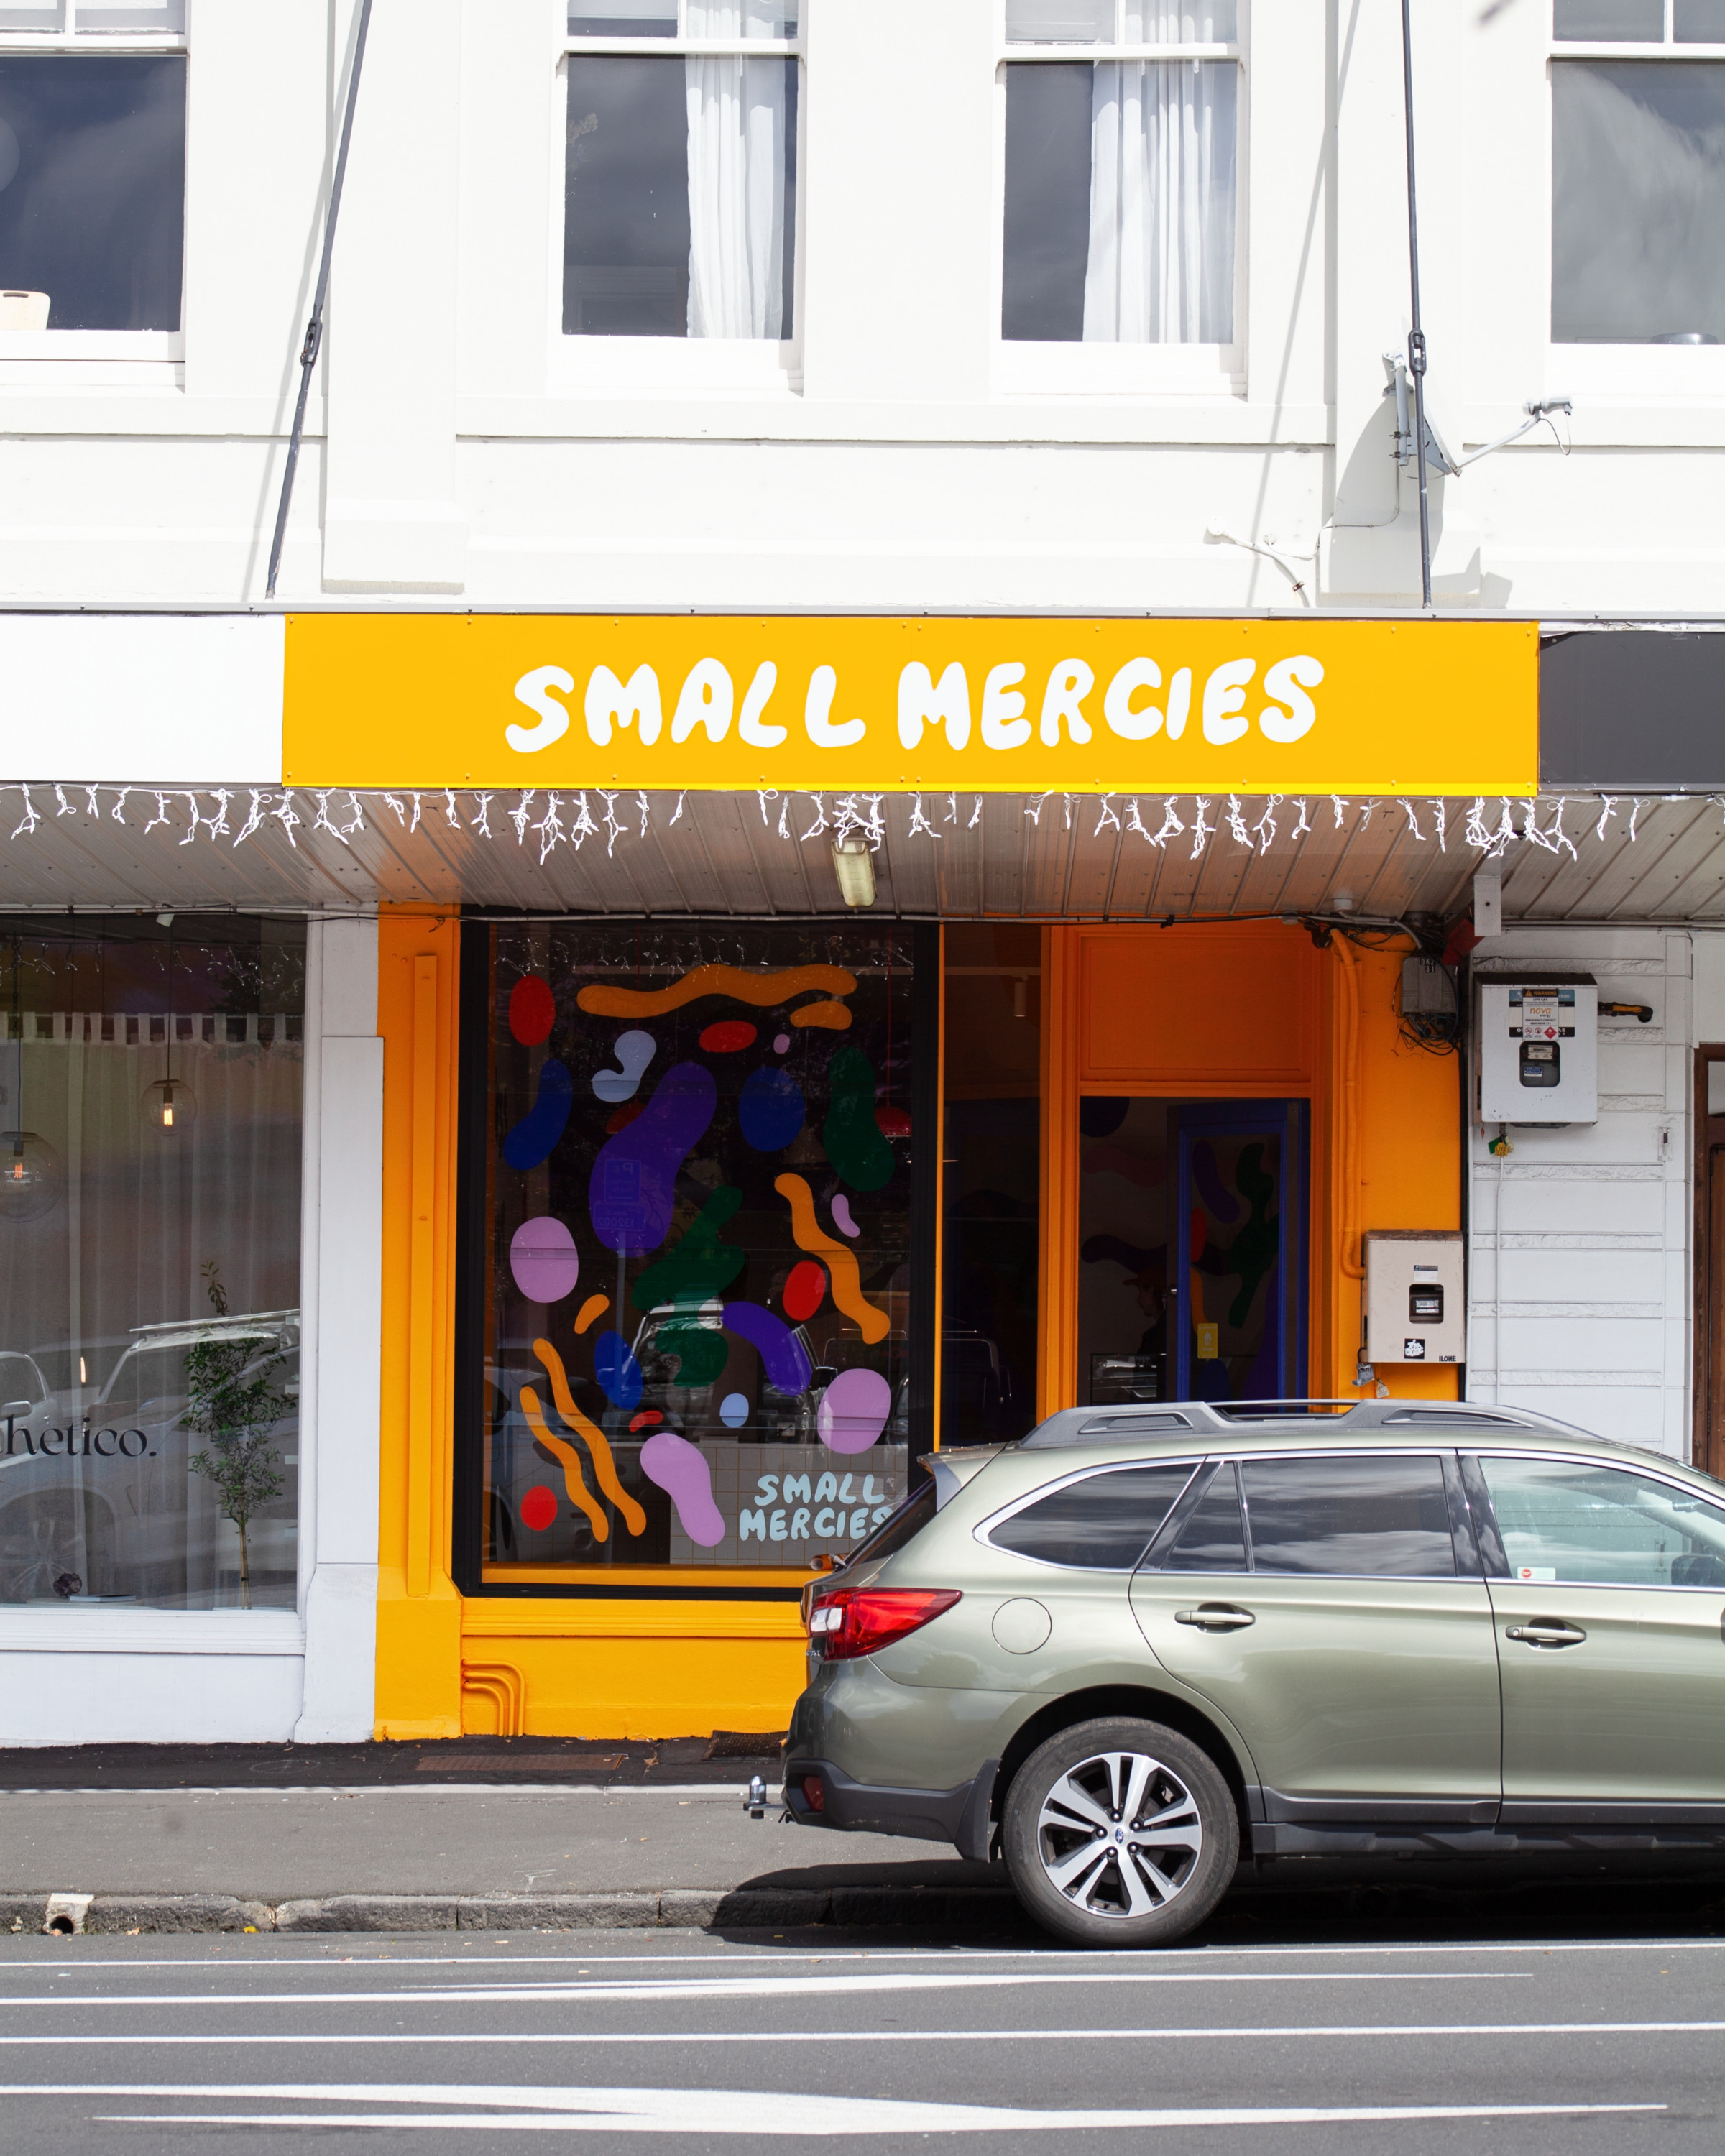 A new Korean doughnut shop has opened in Auckland